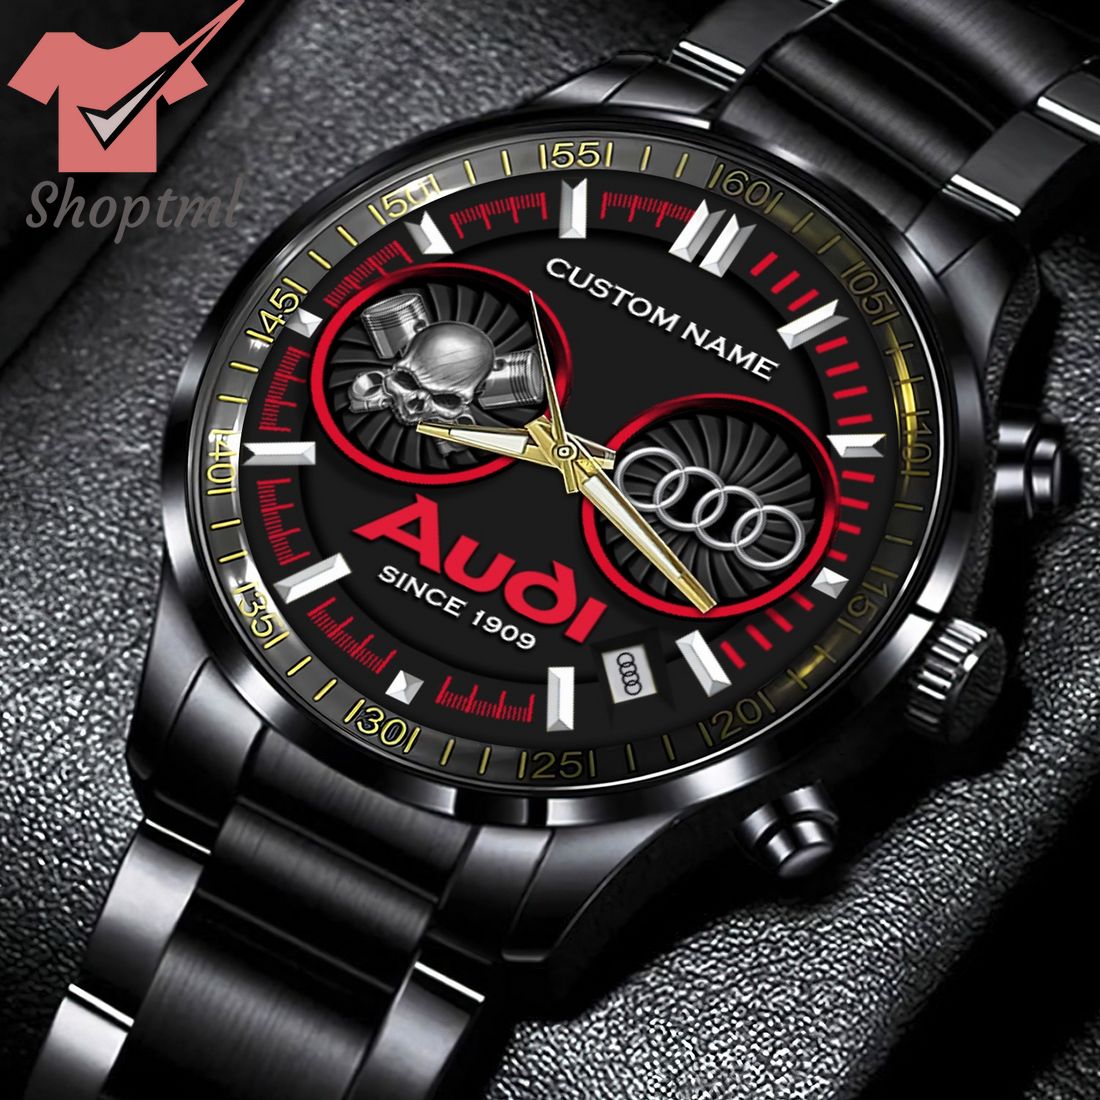 Audi since 1909 custom name black stainless steel watch